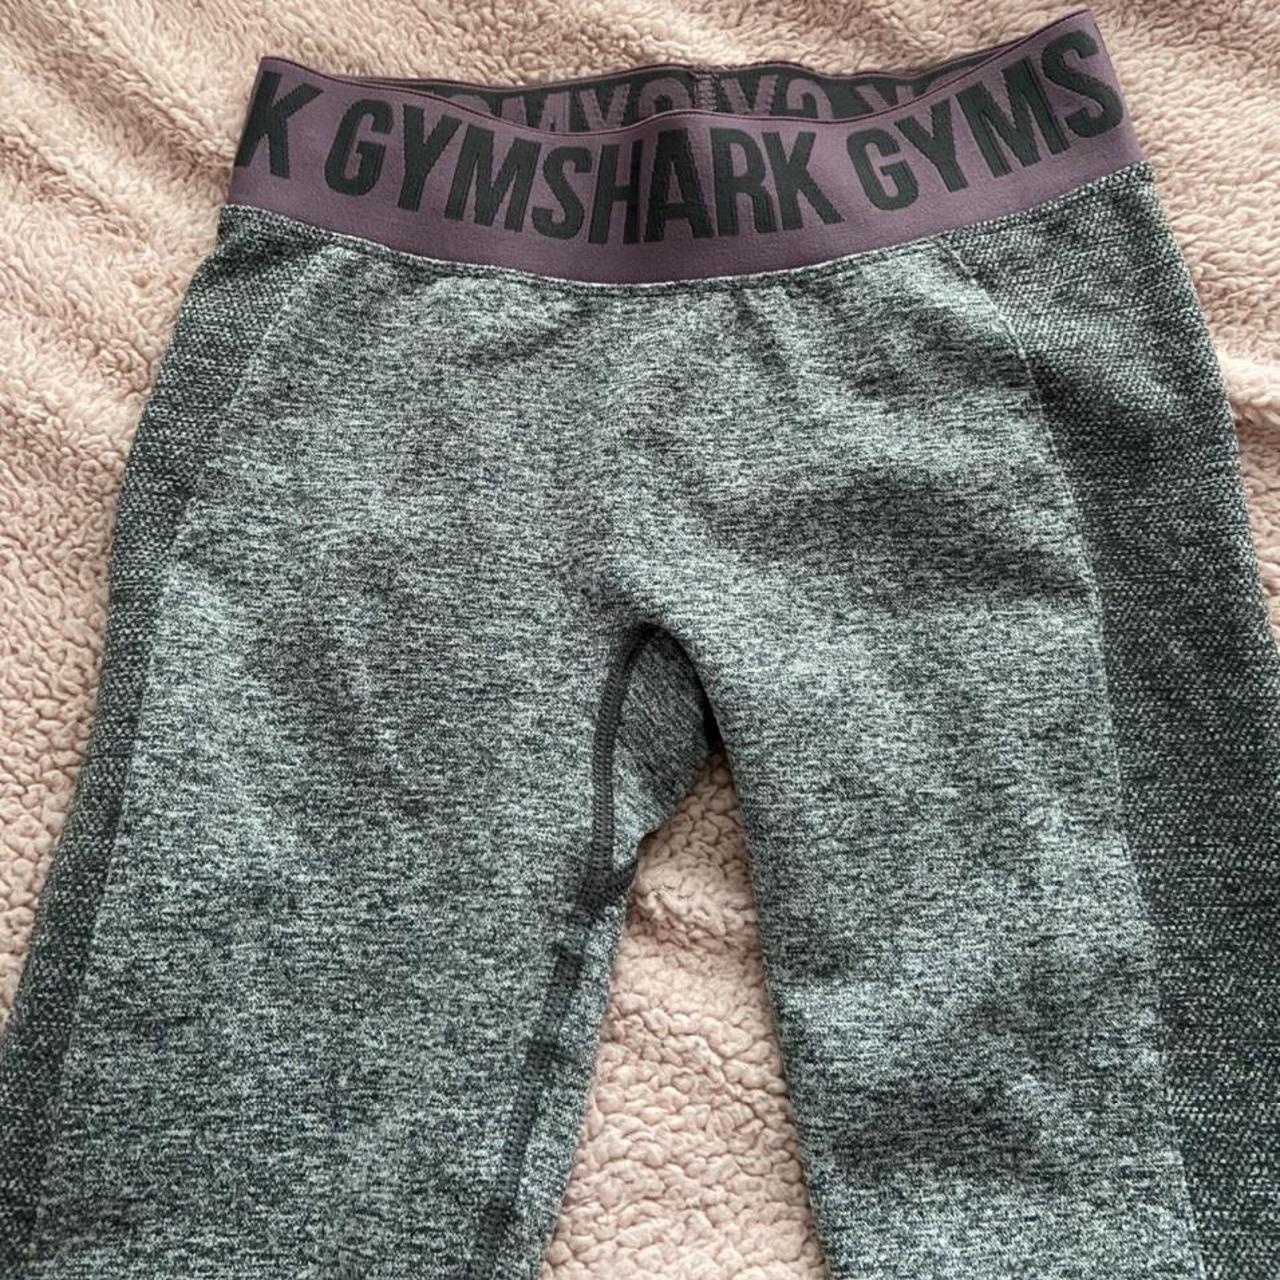 Gym shark Flex leggings, colour charcoal marl(grey).... - Depop